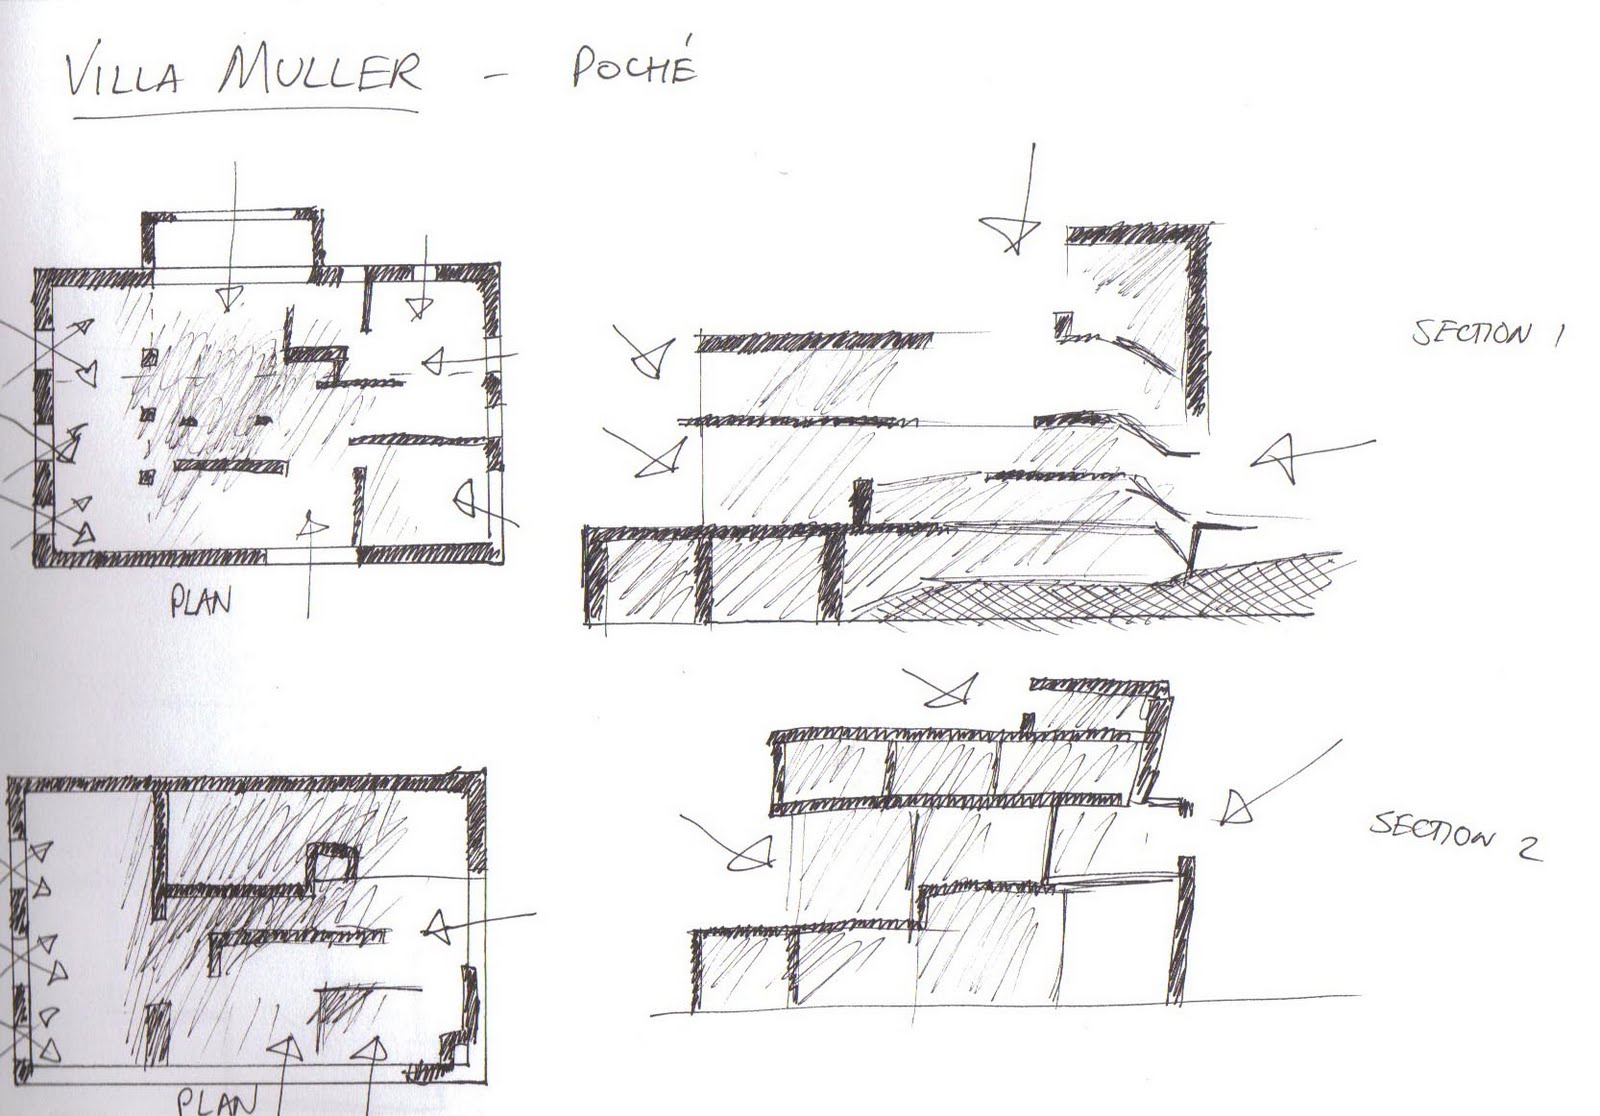 DMITRI: Project 1 - Exploration of Villa Muller (work in progress)